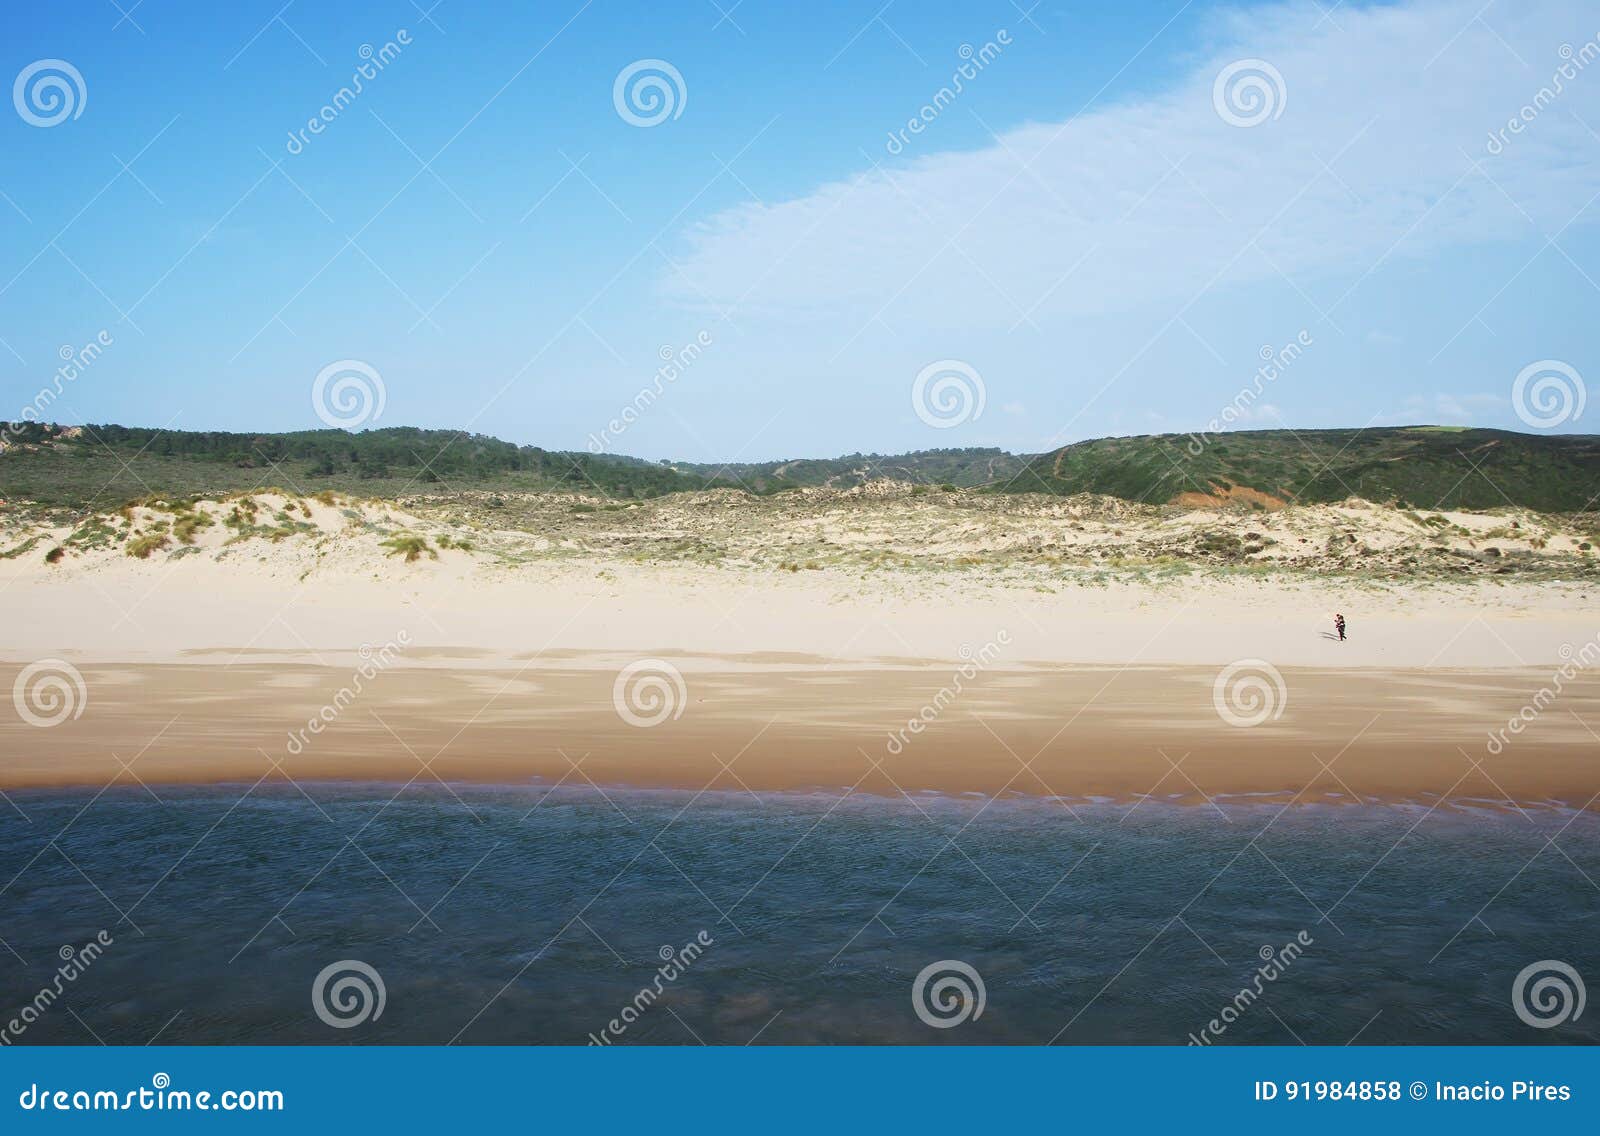 amoreira beach in the costa vincentina , portugal